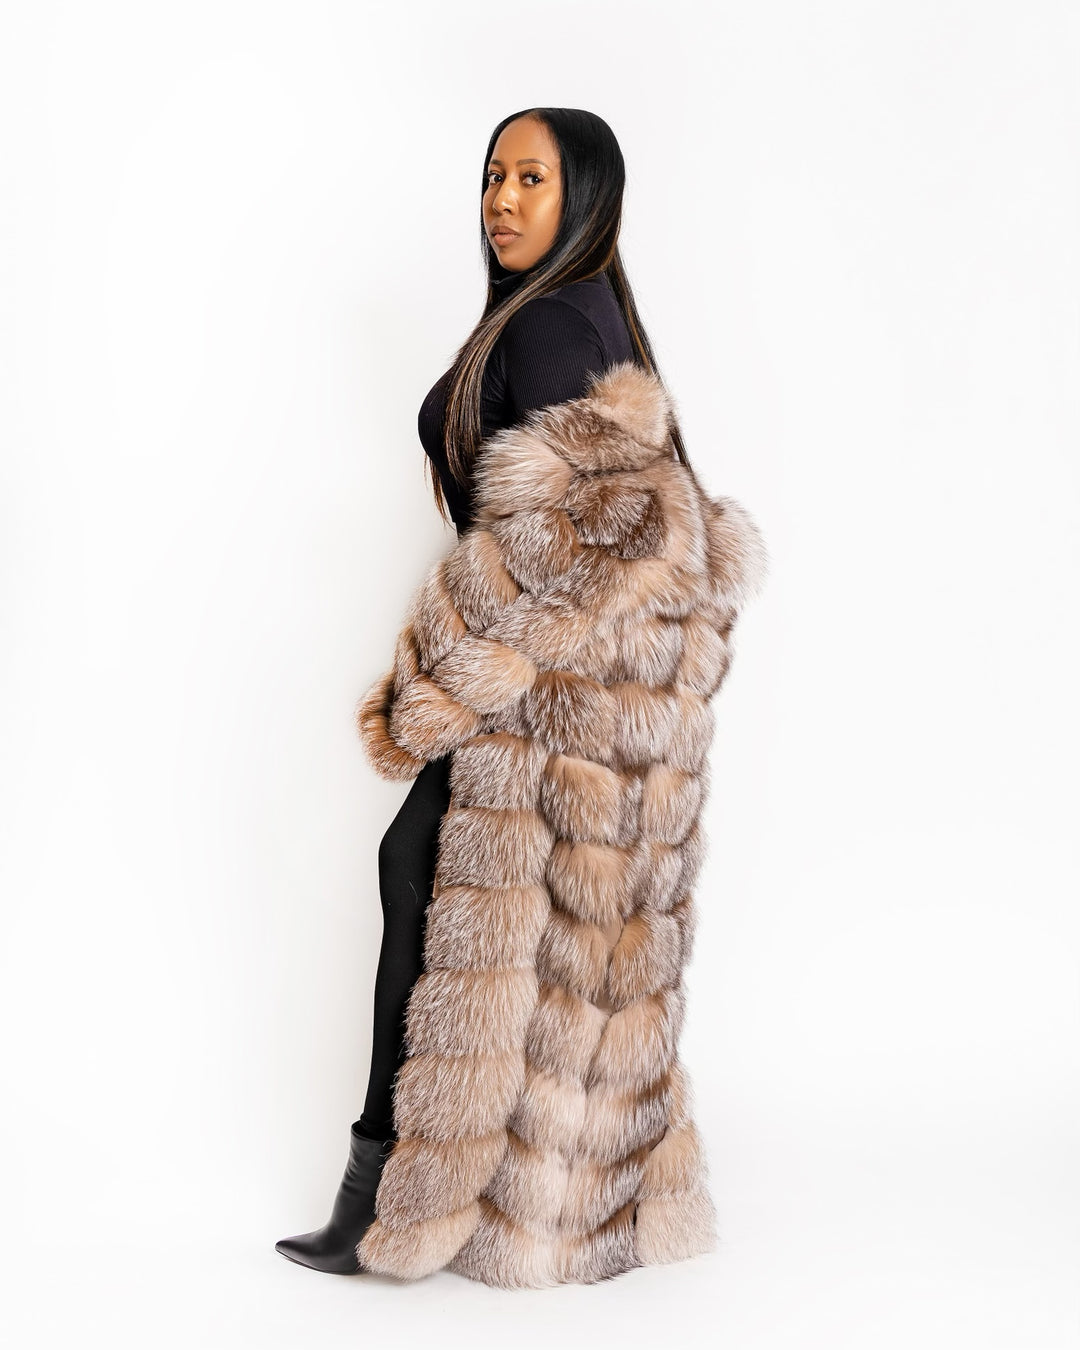 The "Tenia" Crystal Fox Full Length Fur Coat/Vest